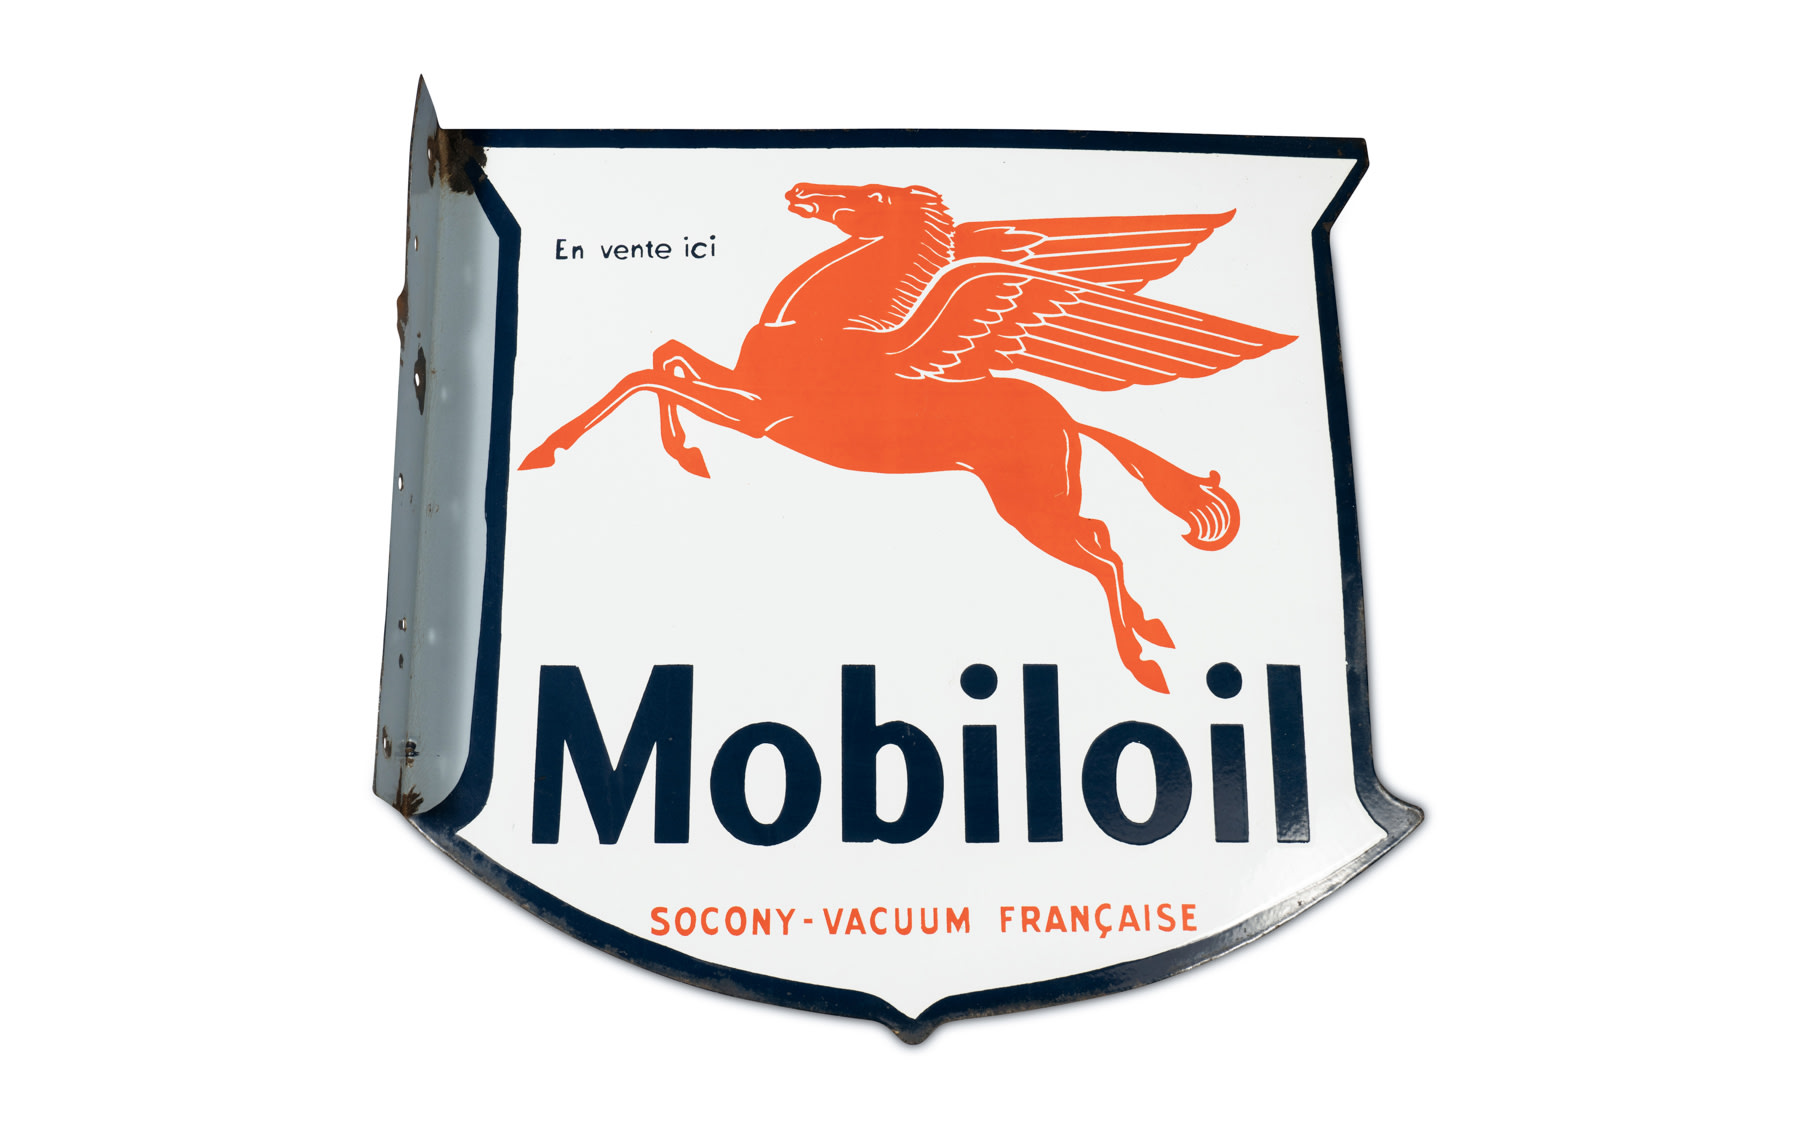 French Mobiloil Sign